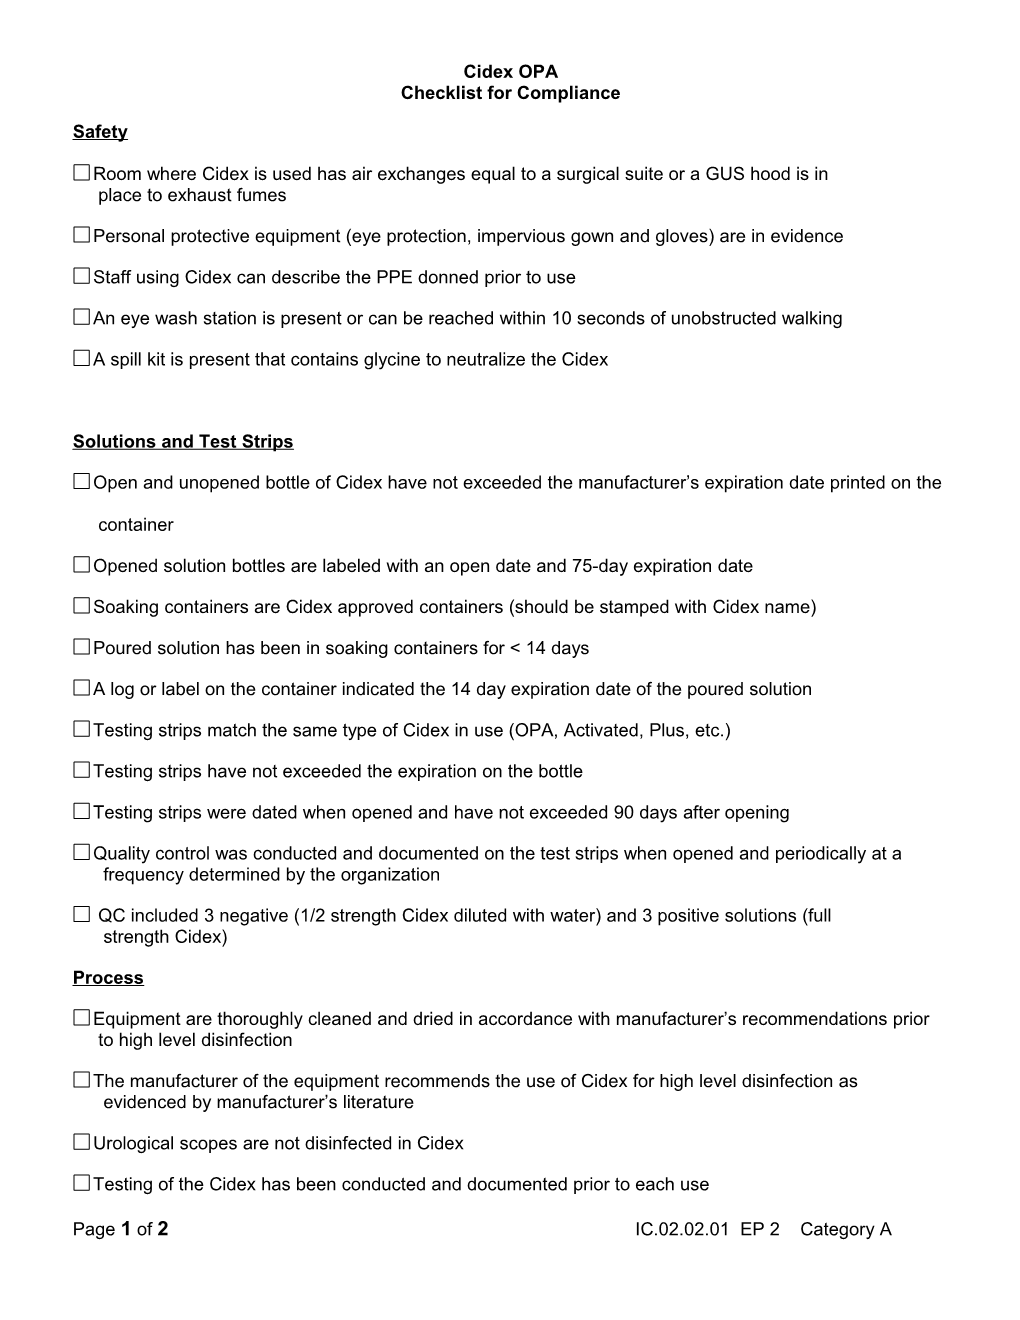 Checklist for Compliance